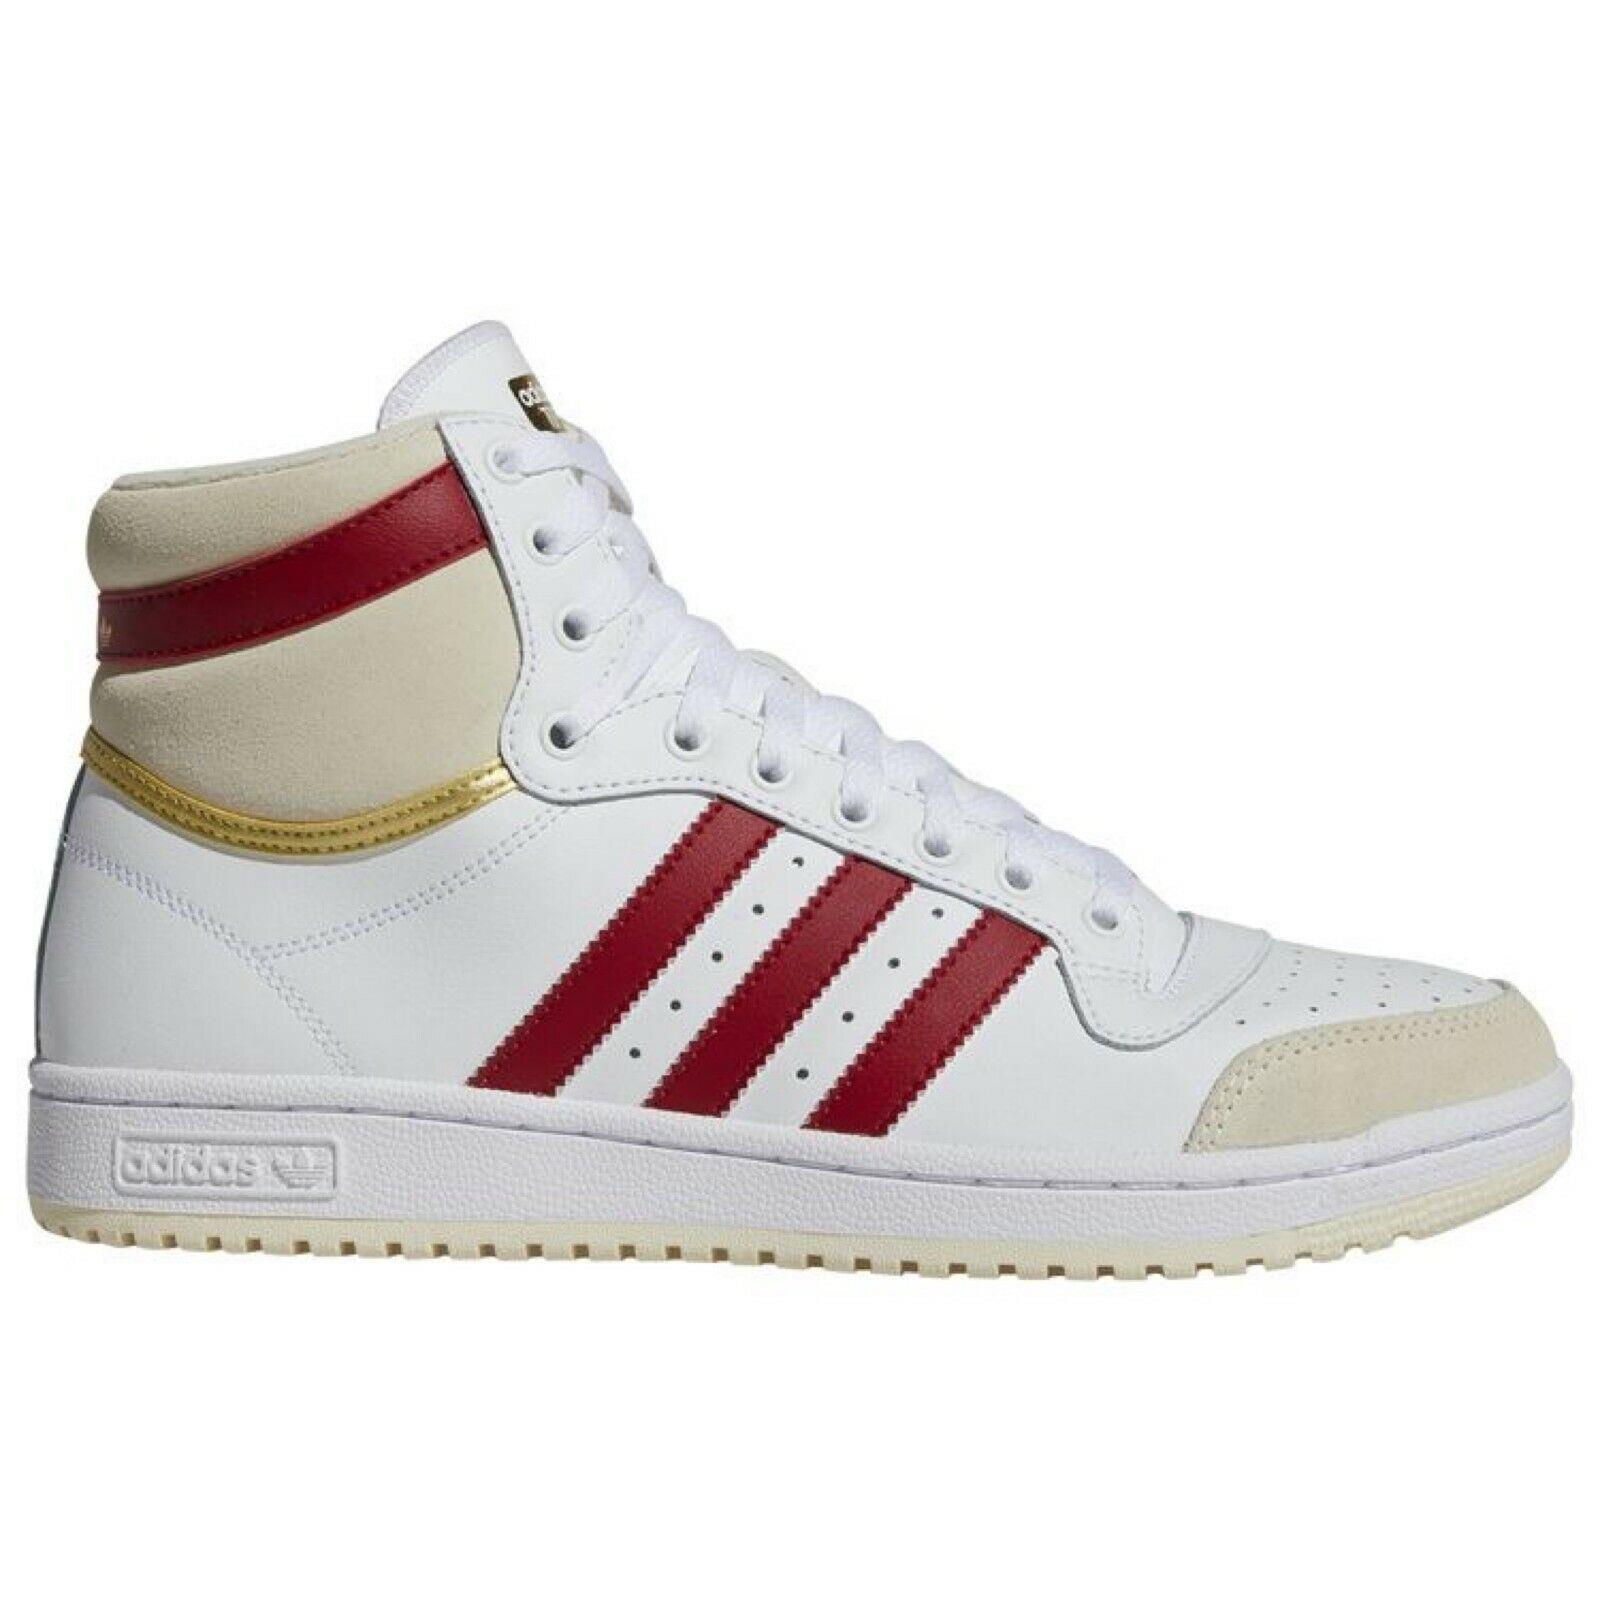 Adidas Originals Top Ten Mid Men`s Sneakers Comfort Sport Casual Shoes White Red